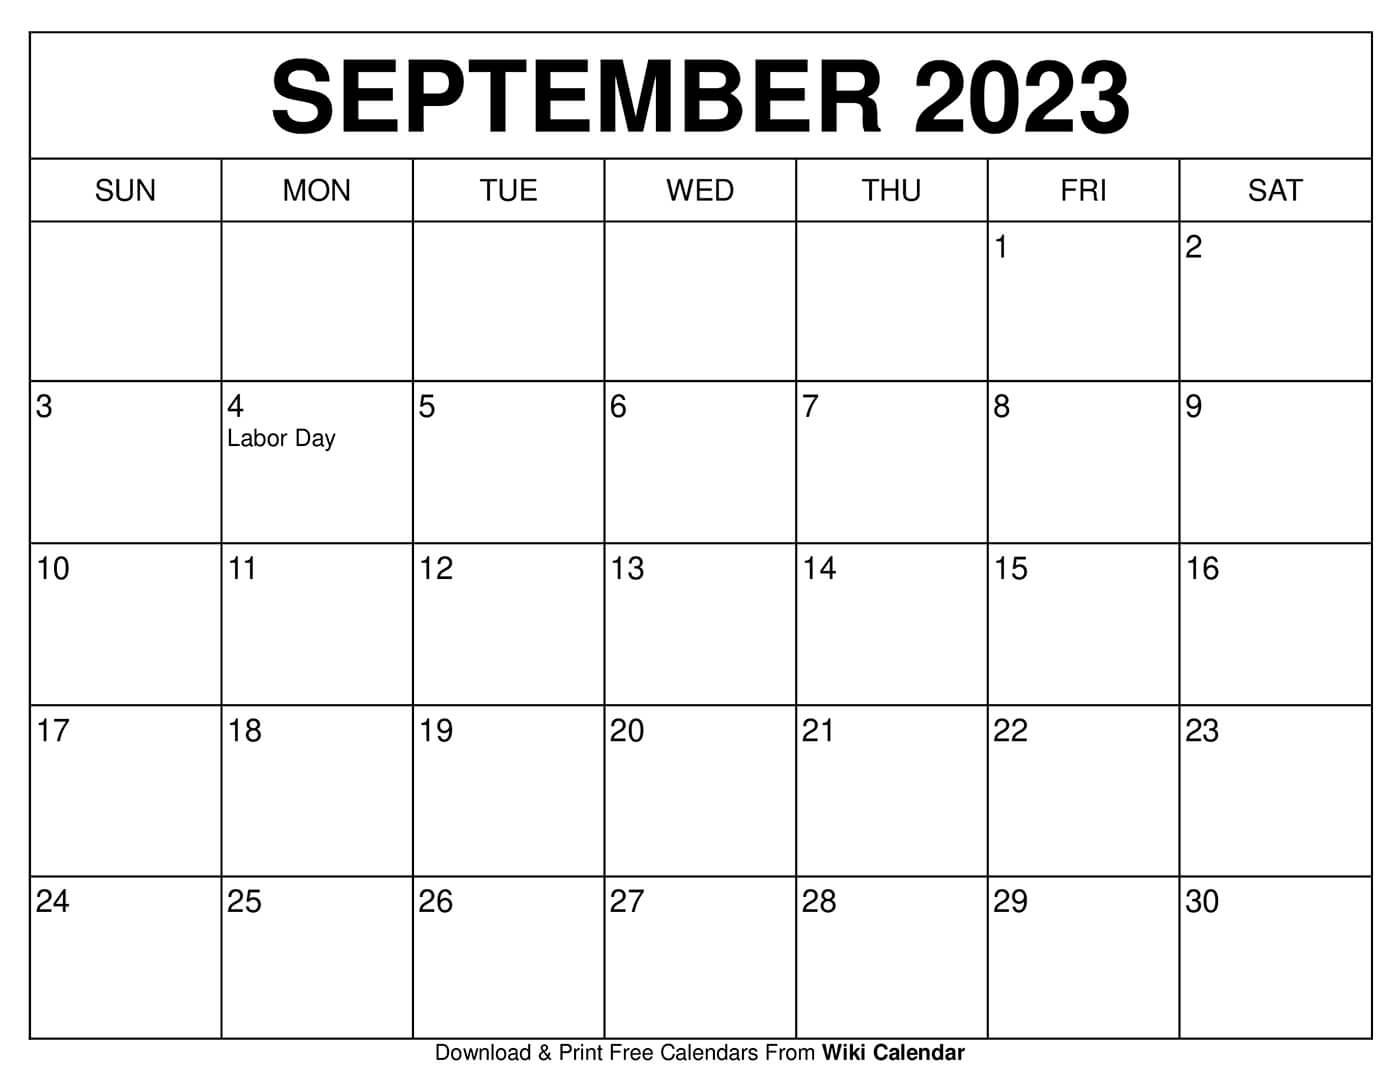 Free Printable September 2023 Calendar Templates With Holidays